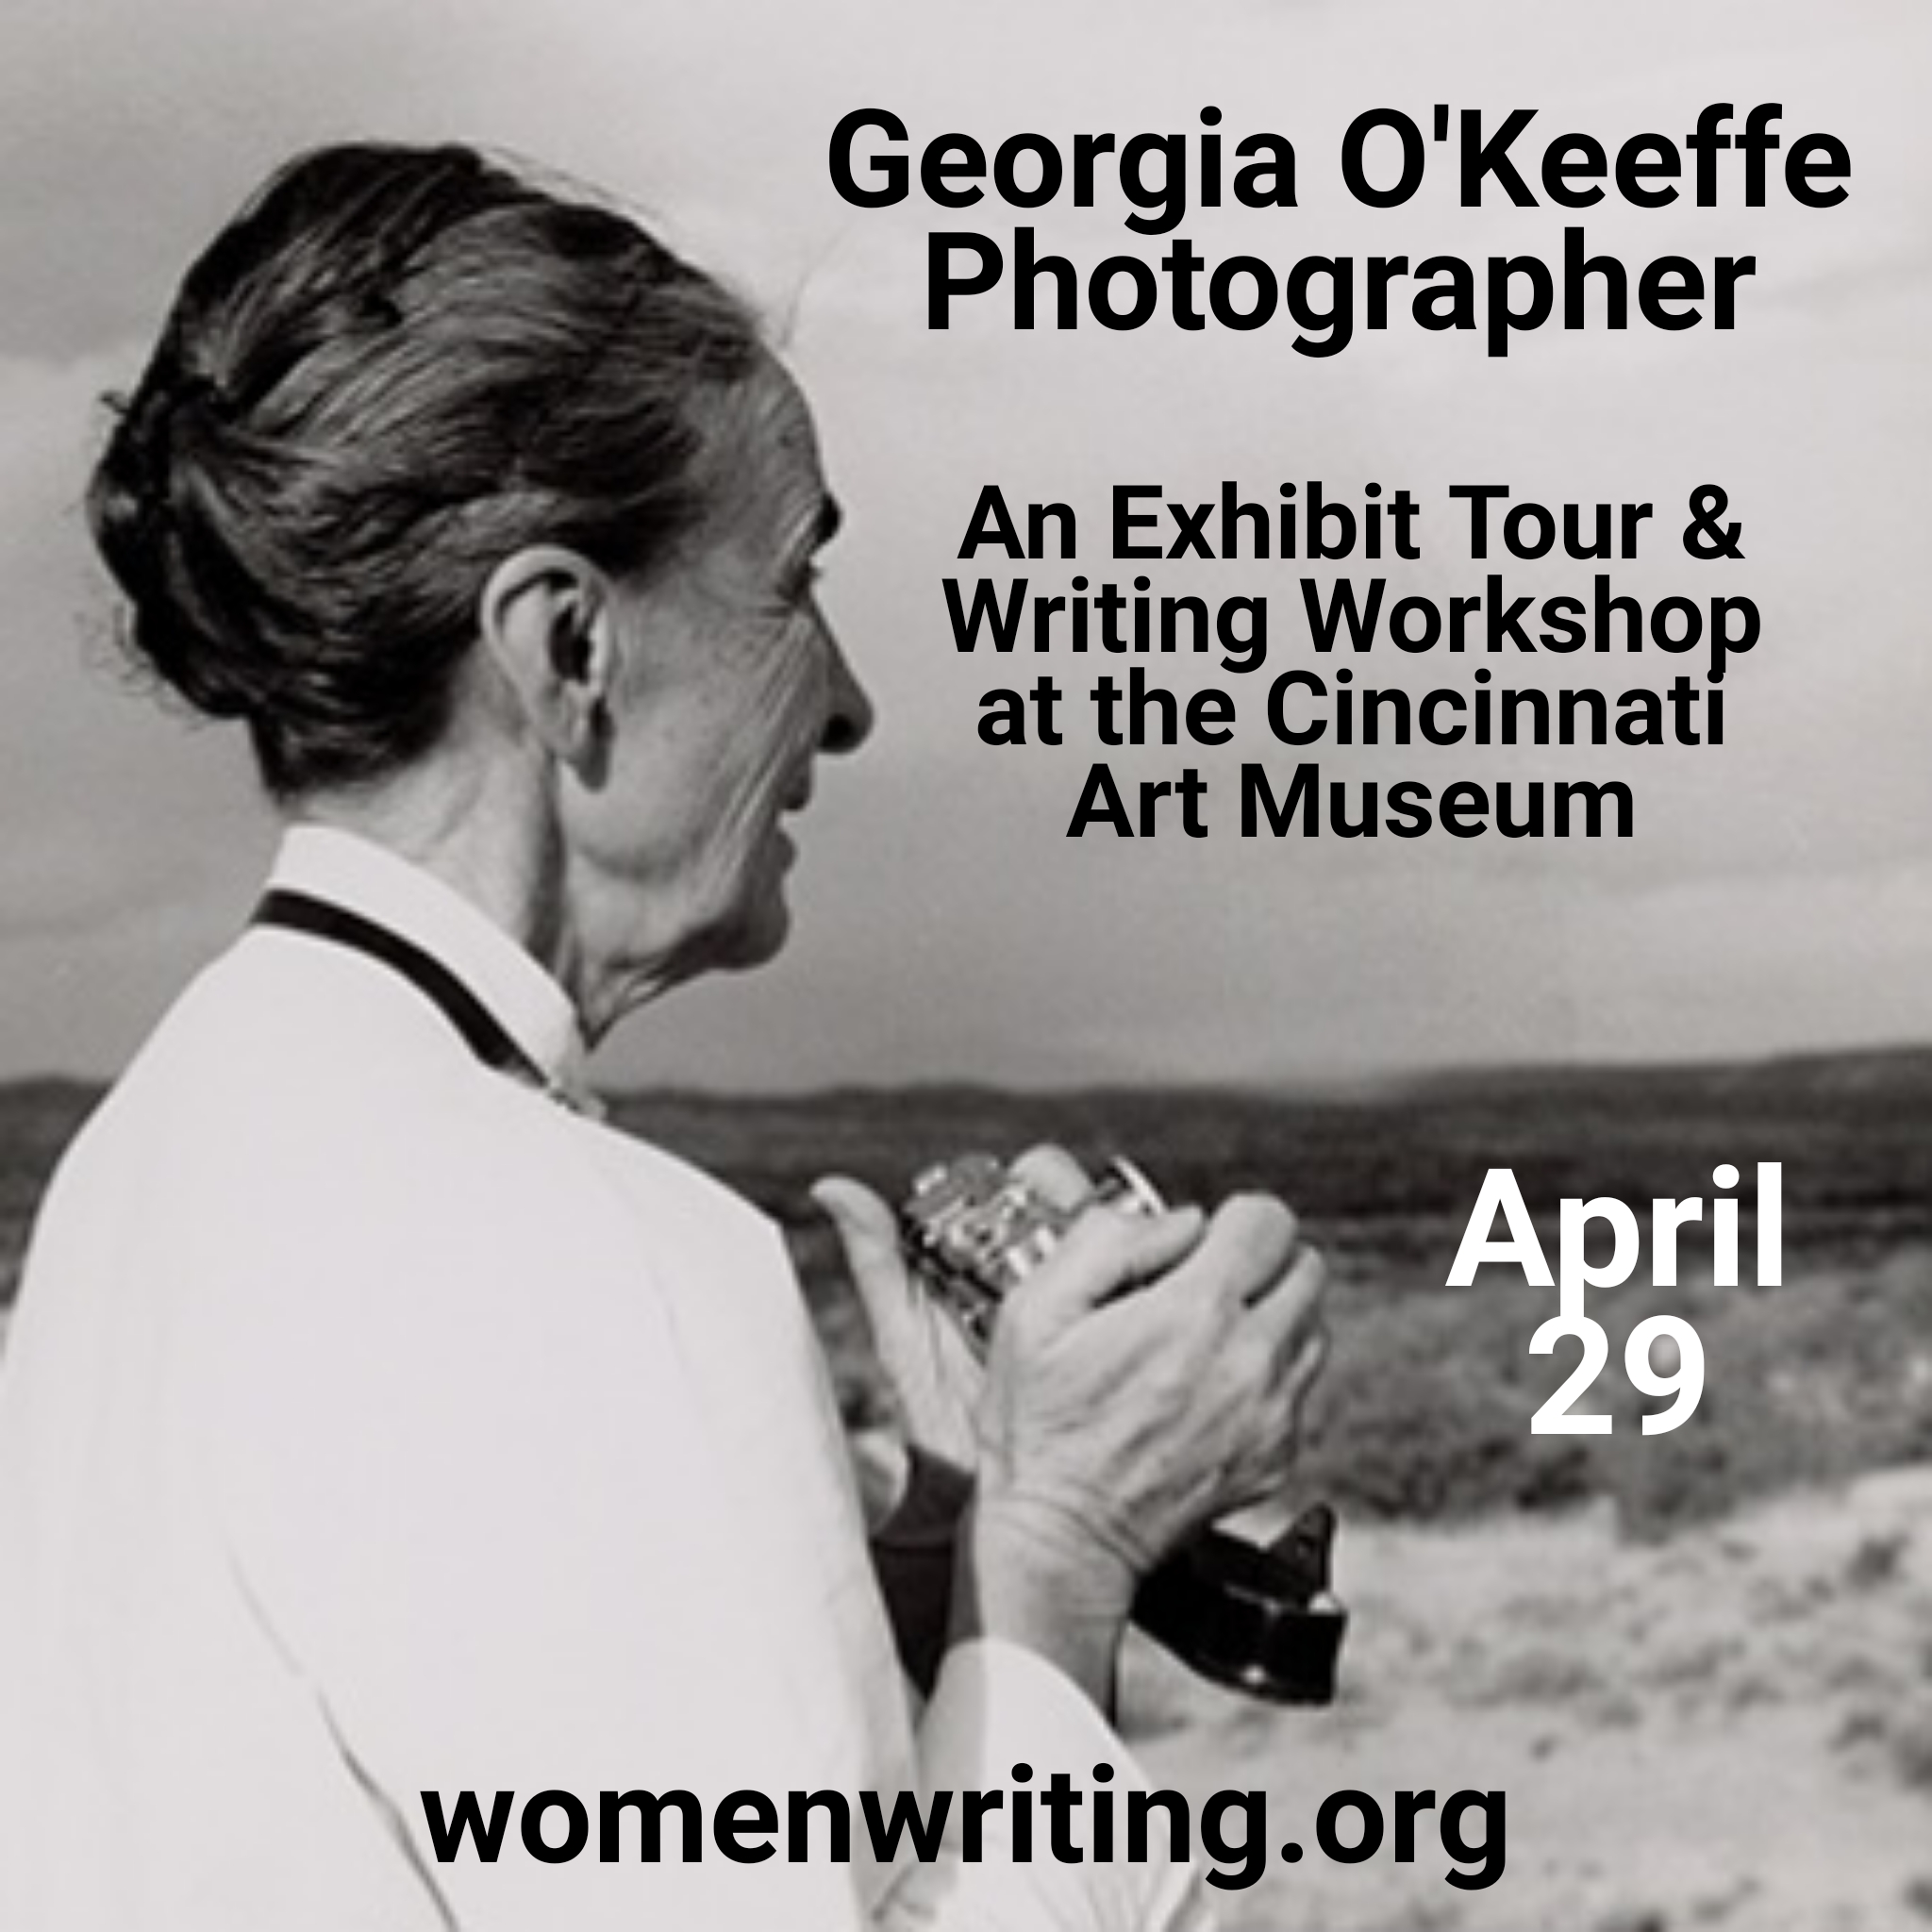 Georgia O'Keeffe, Photographer Image